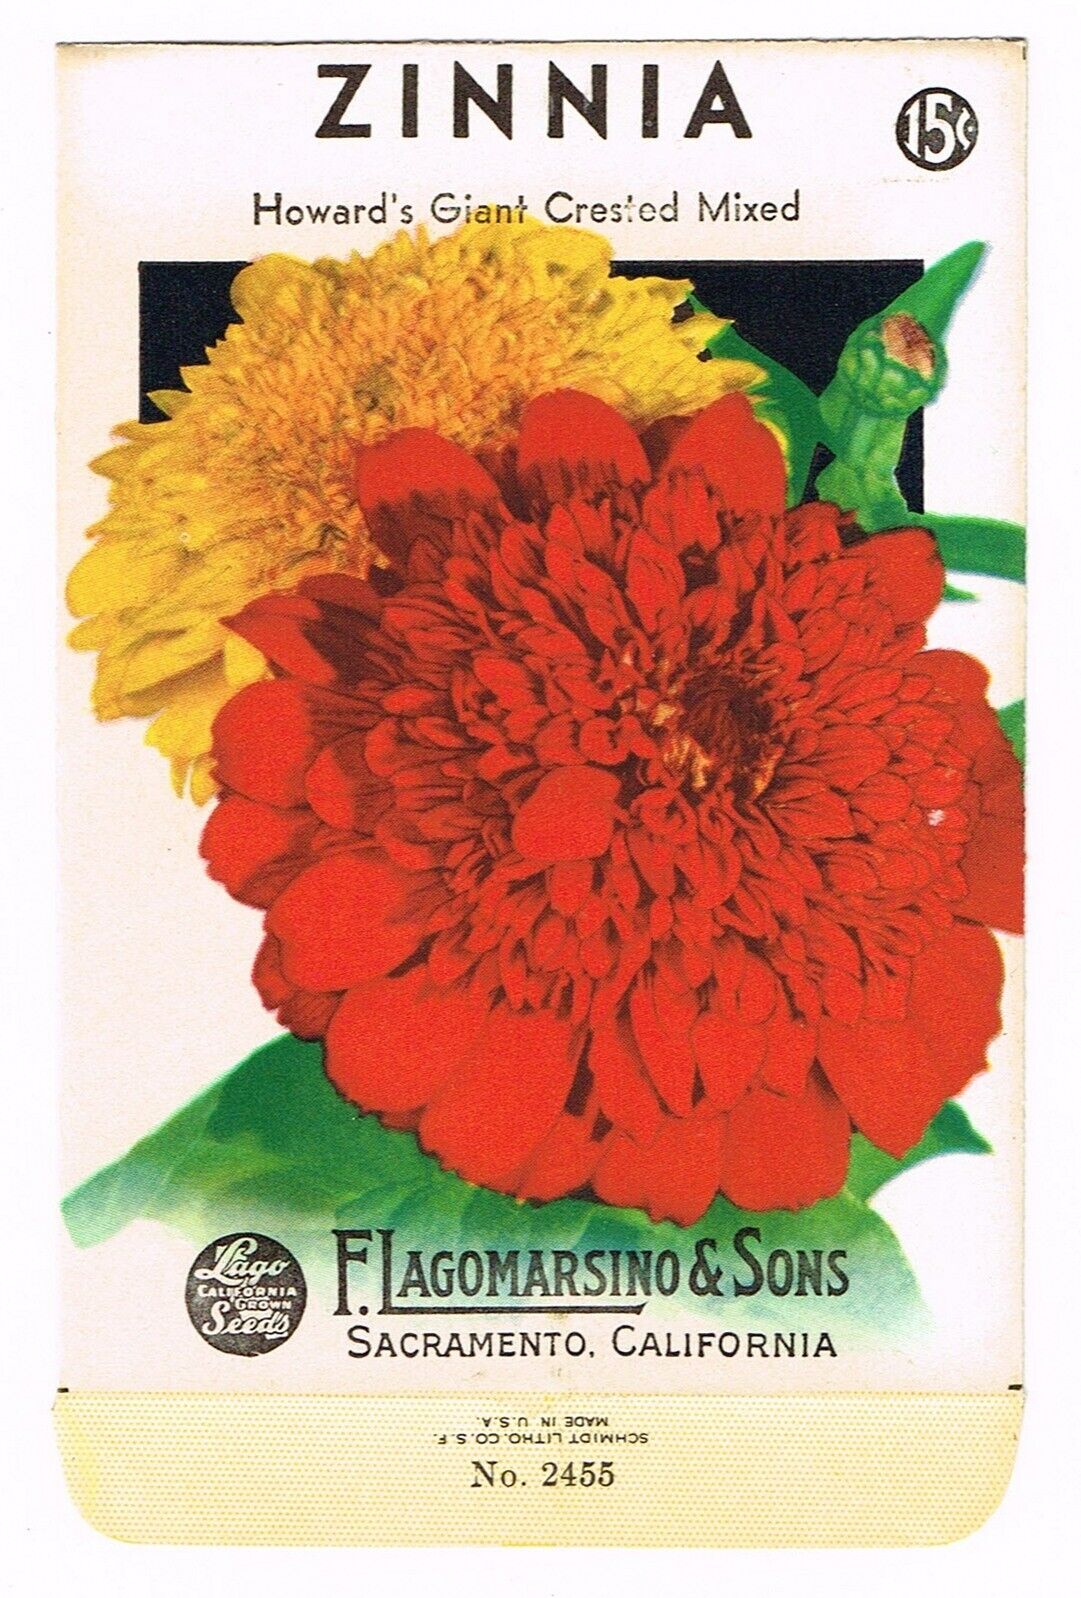 ORIGINAL VINTAGE SEED PACKETS FLOWERS C1930S-1940S SACRAMENTO ZINNIA HOWARDS